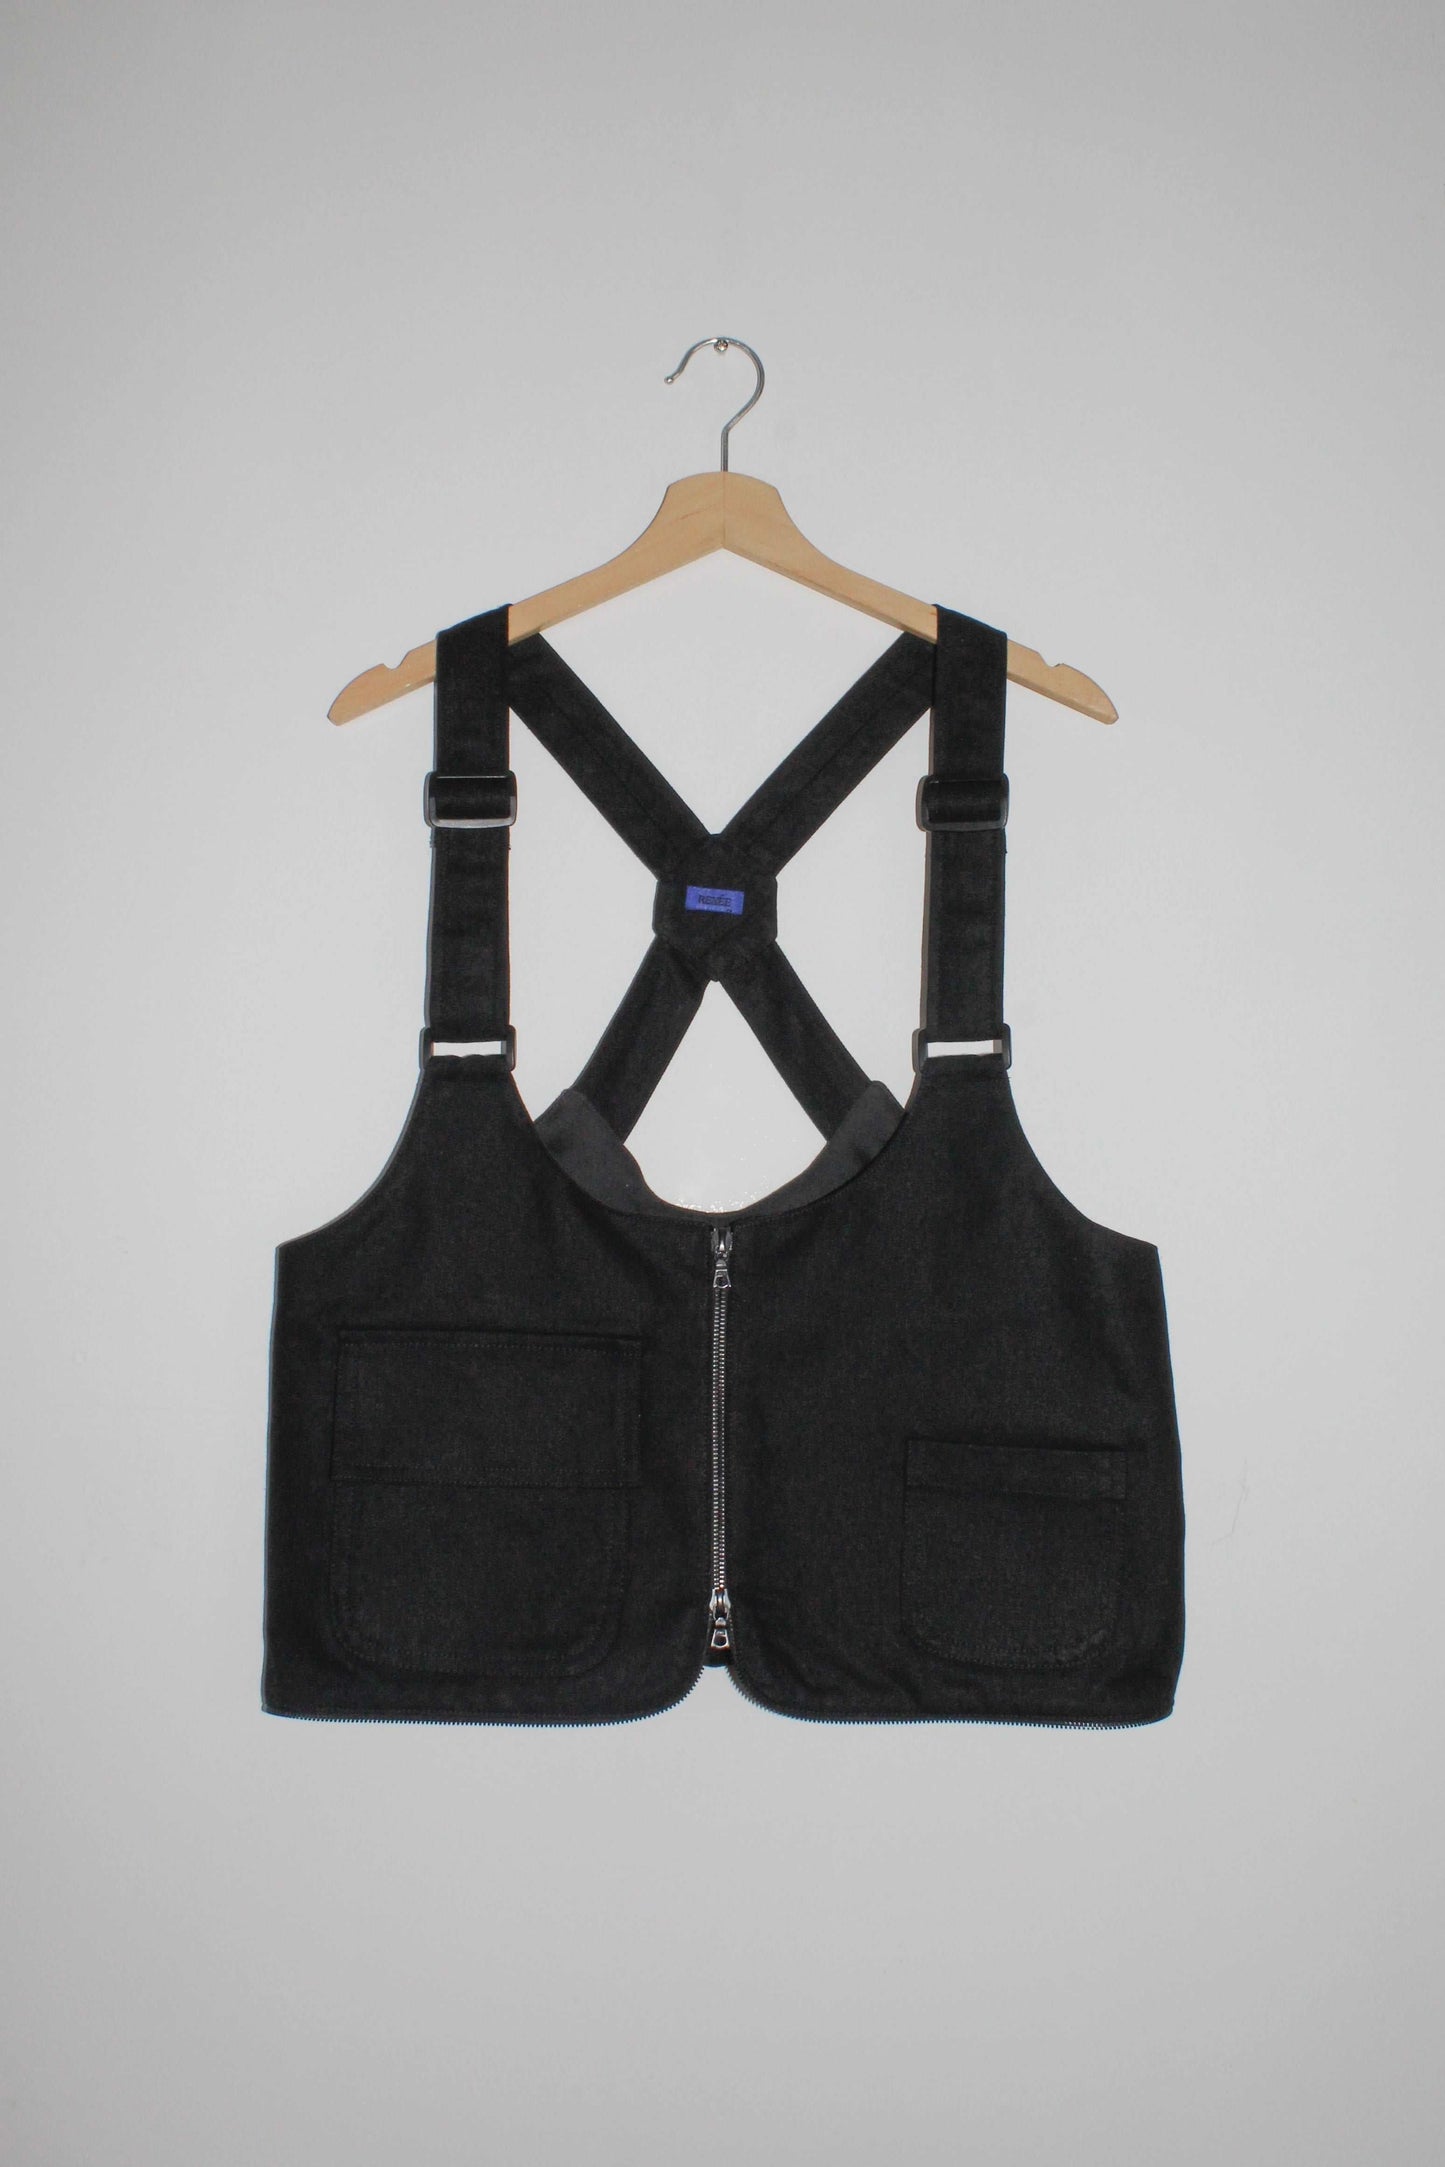 CamFront view black denim cropped adjustable strap convertible vest bag with cargo pockets's Cargo Convertible Vest Bag